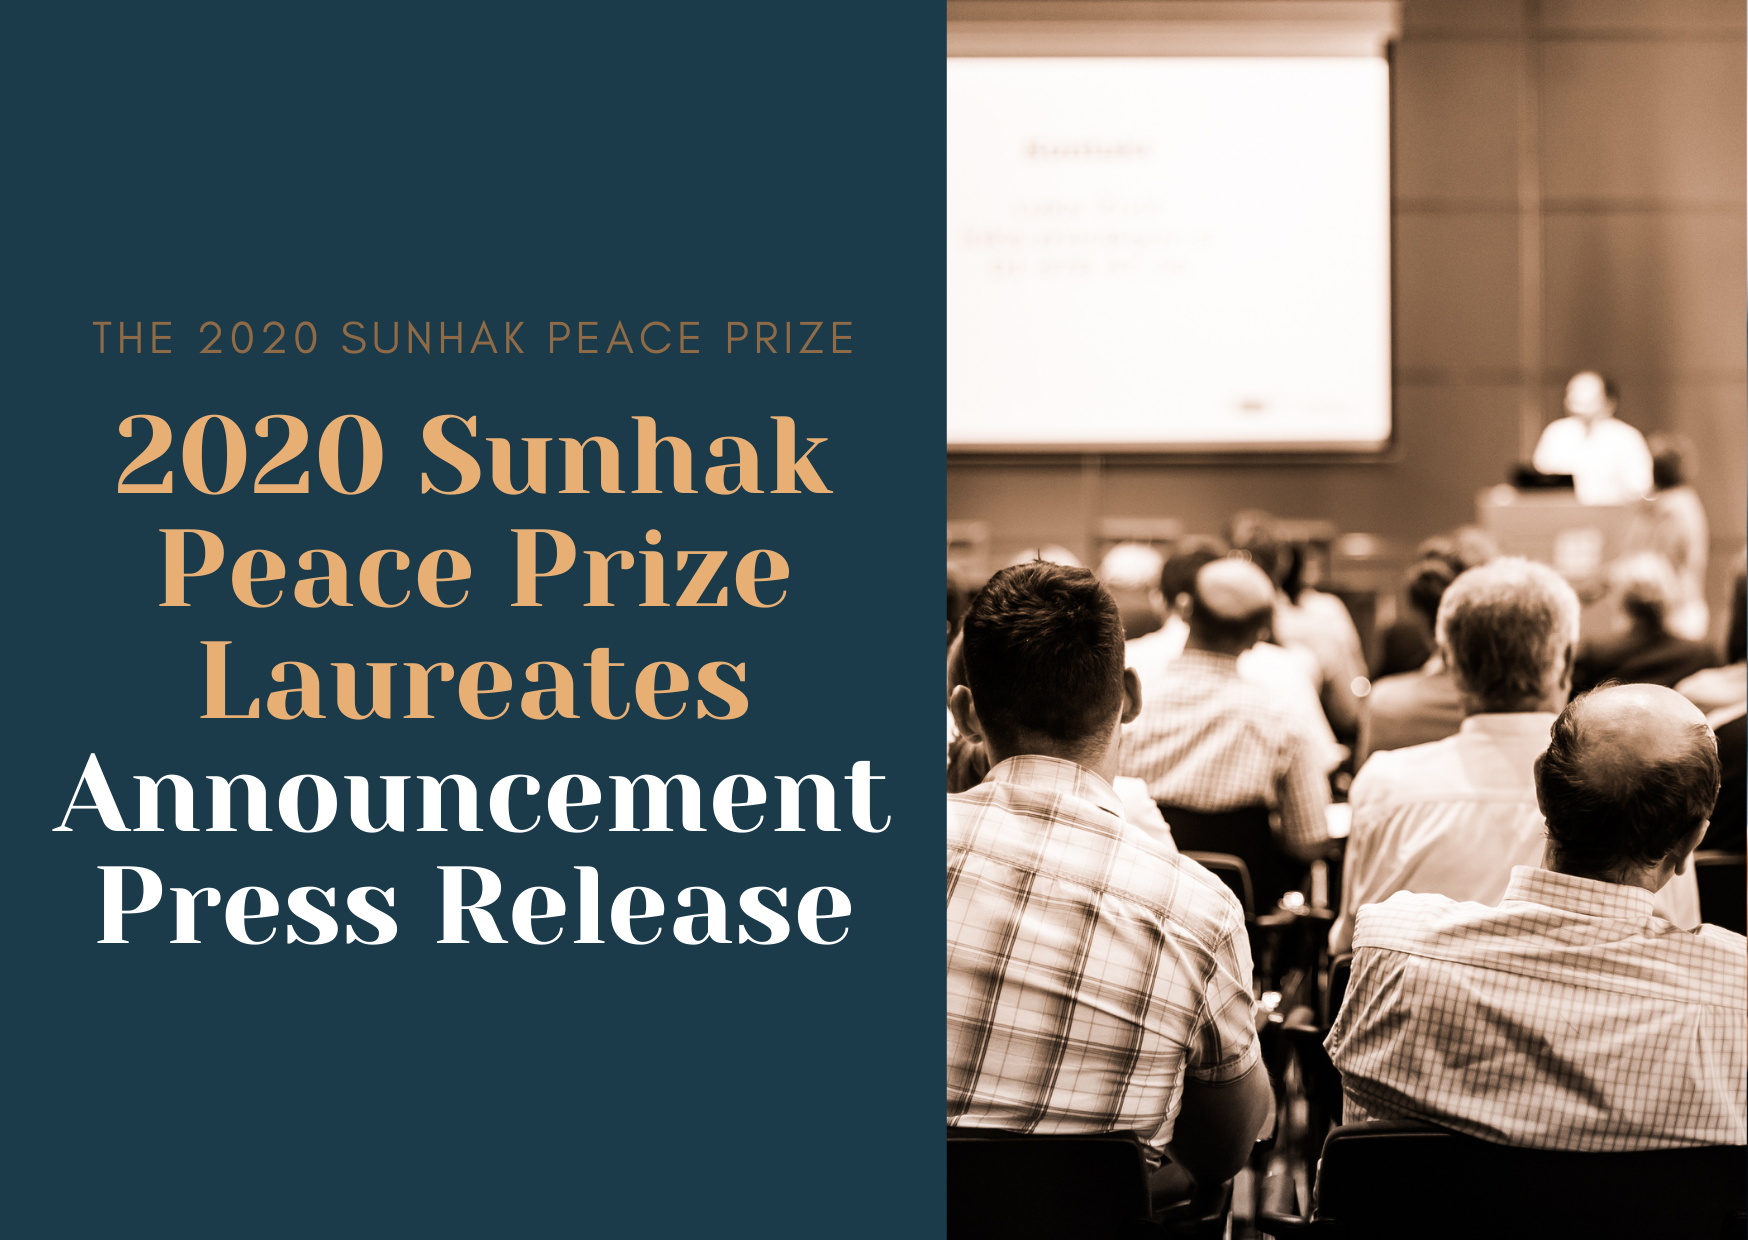 2020 Sunhak Peace Prize Laureates Announcement Press Release 썸네일